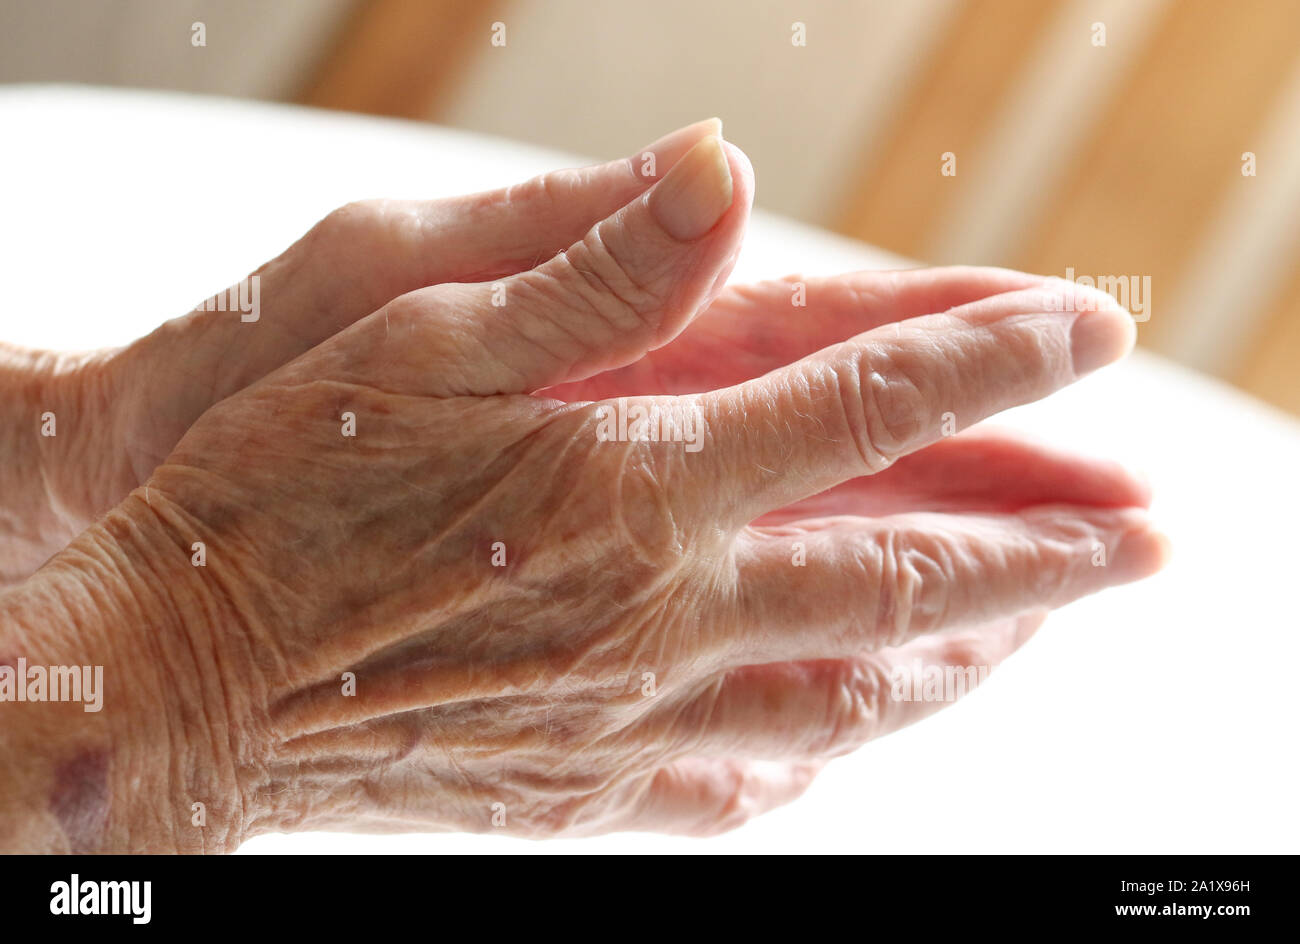 An elderly ladies praying hands suffering from Parkinson's disease. Stock Photo